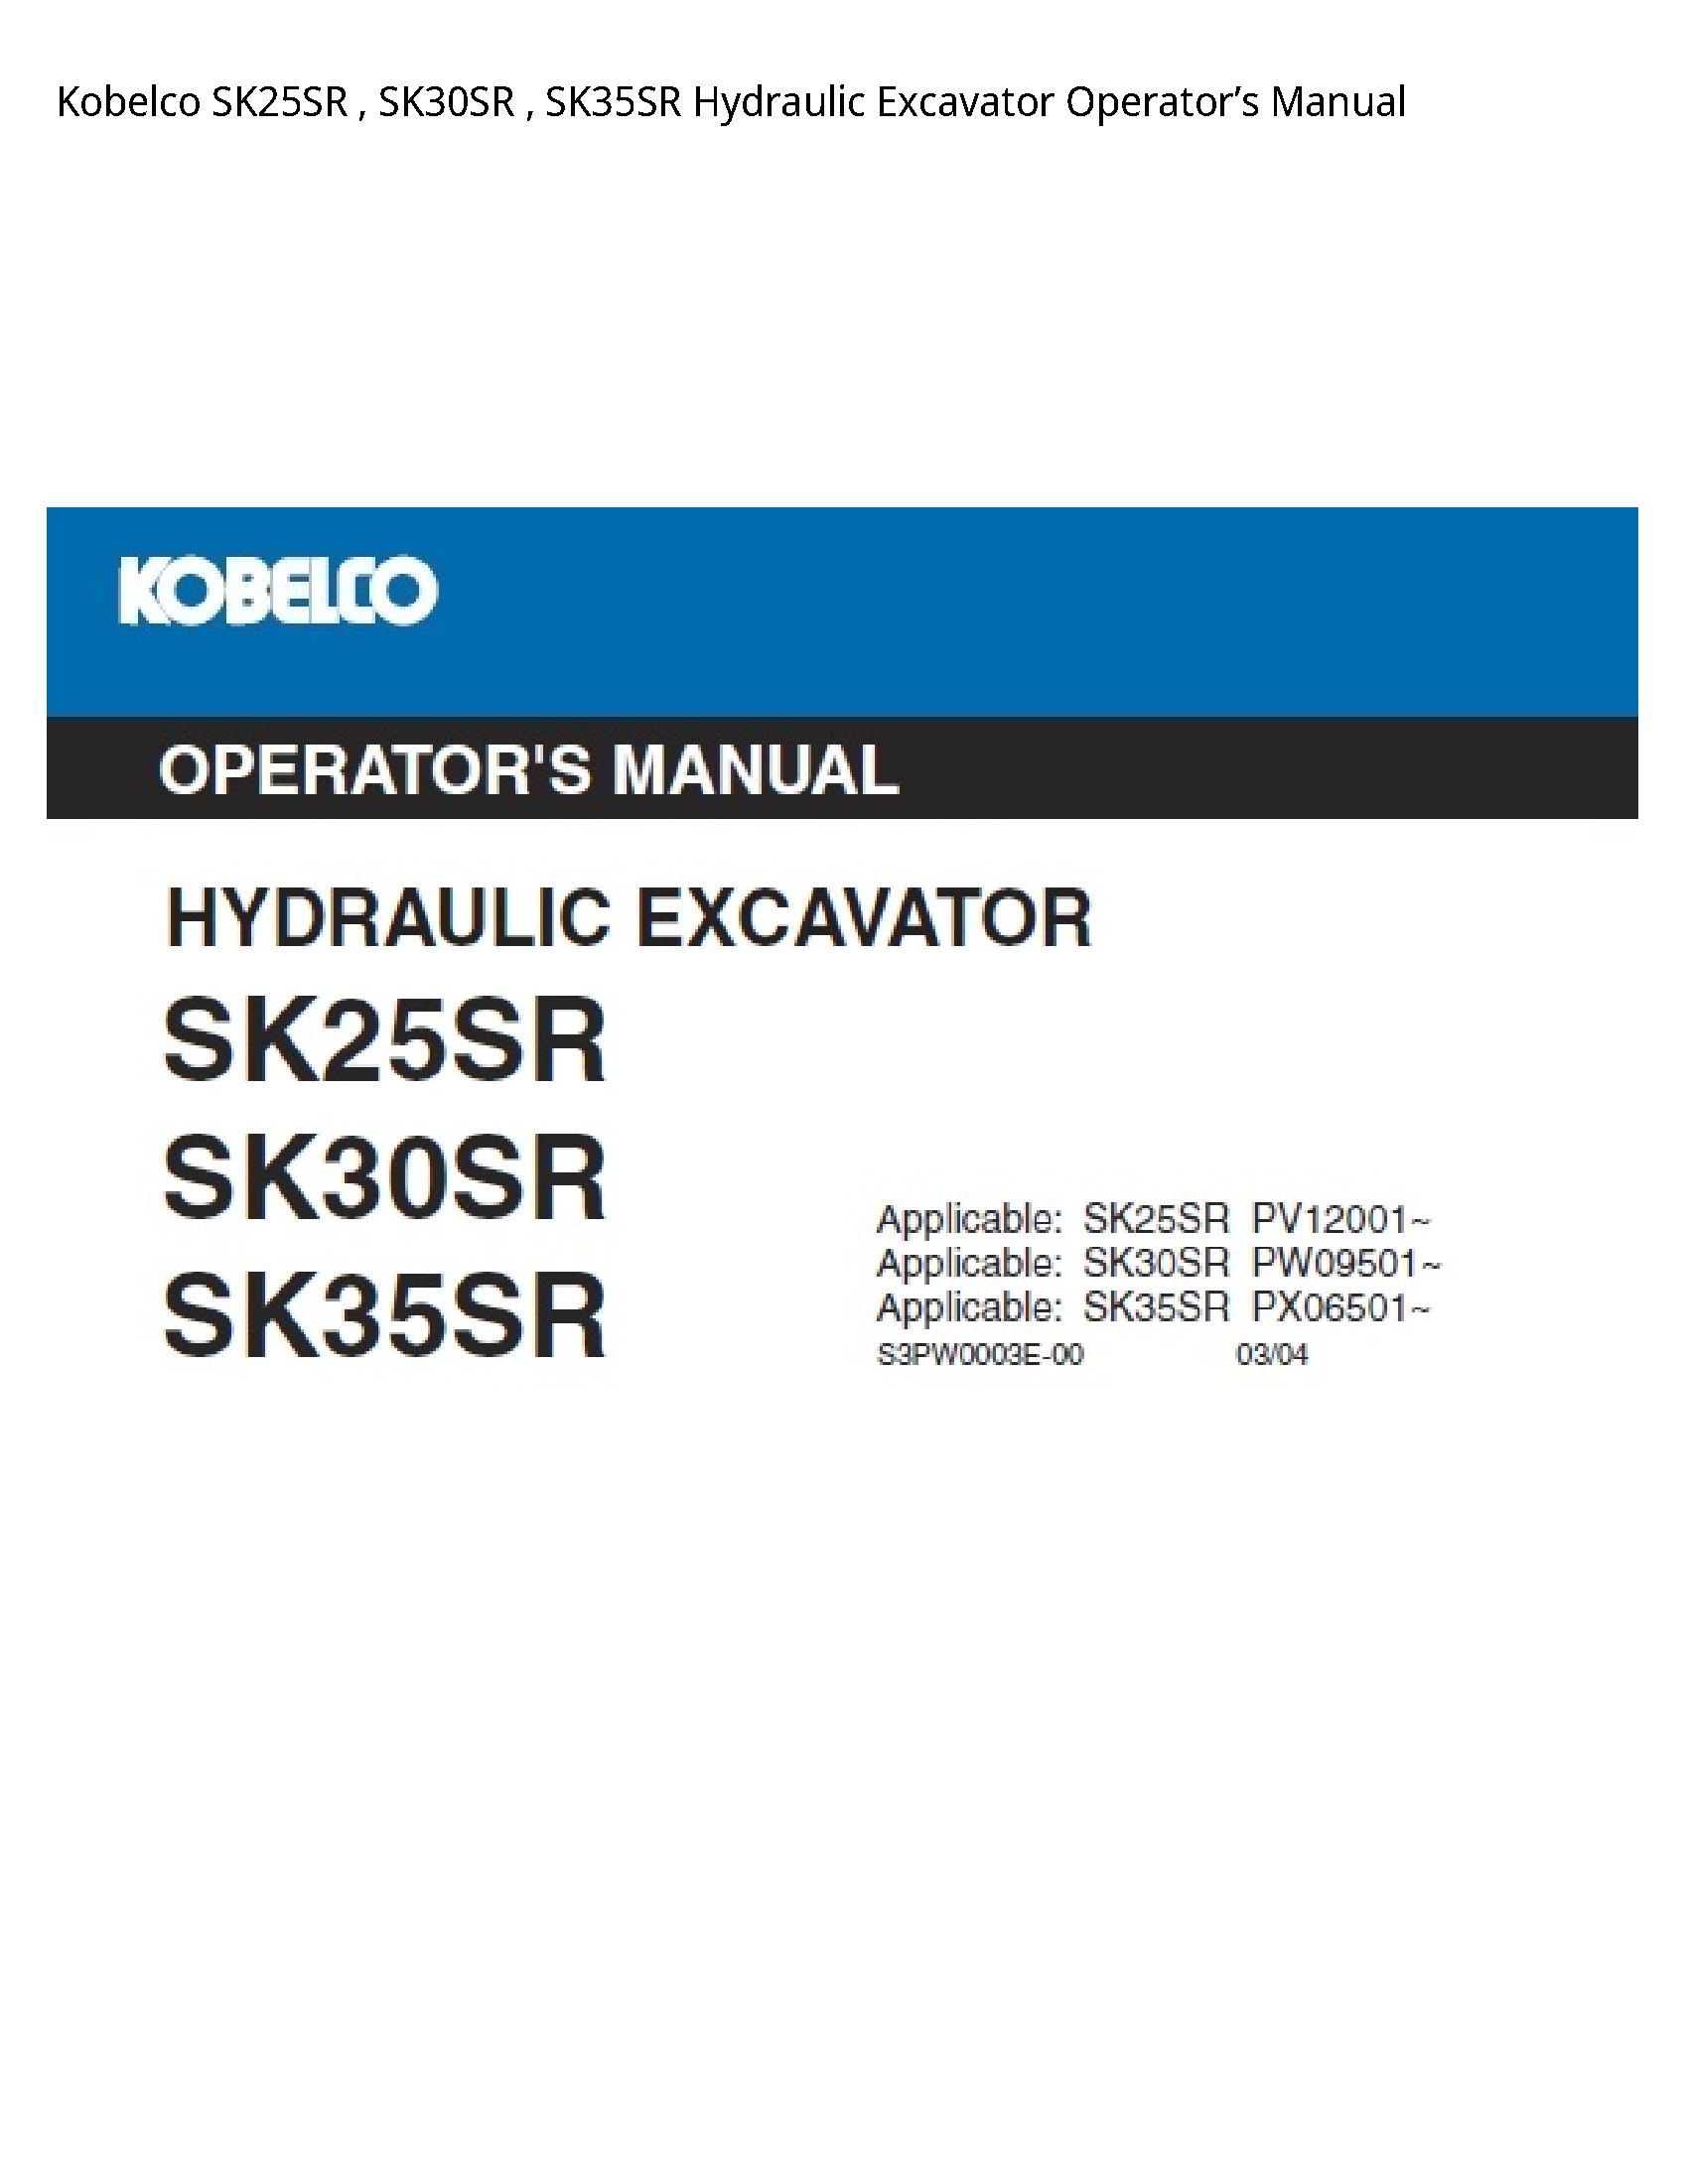 Kobelco SK25SR Hydraulic Excavator Operator’s manual